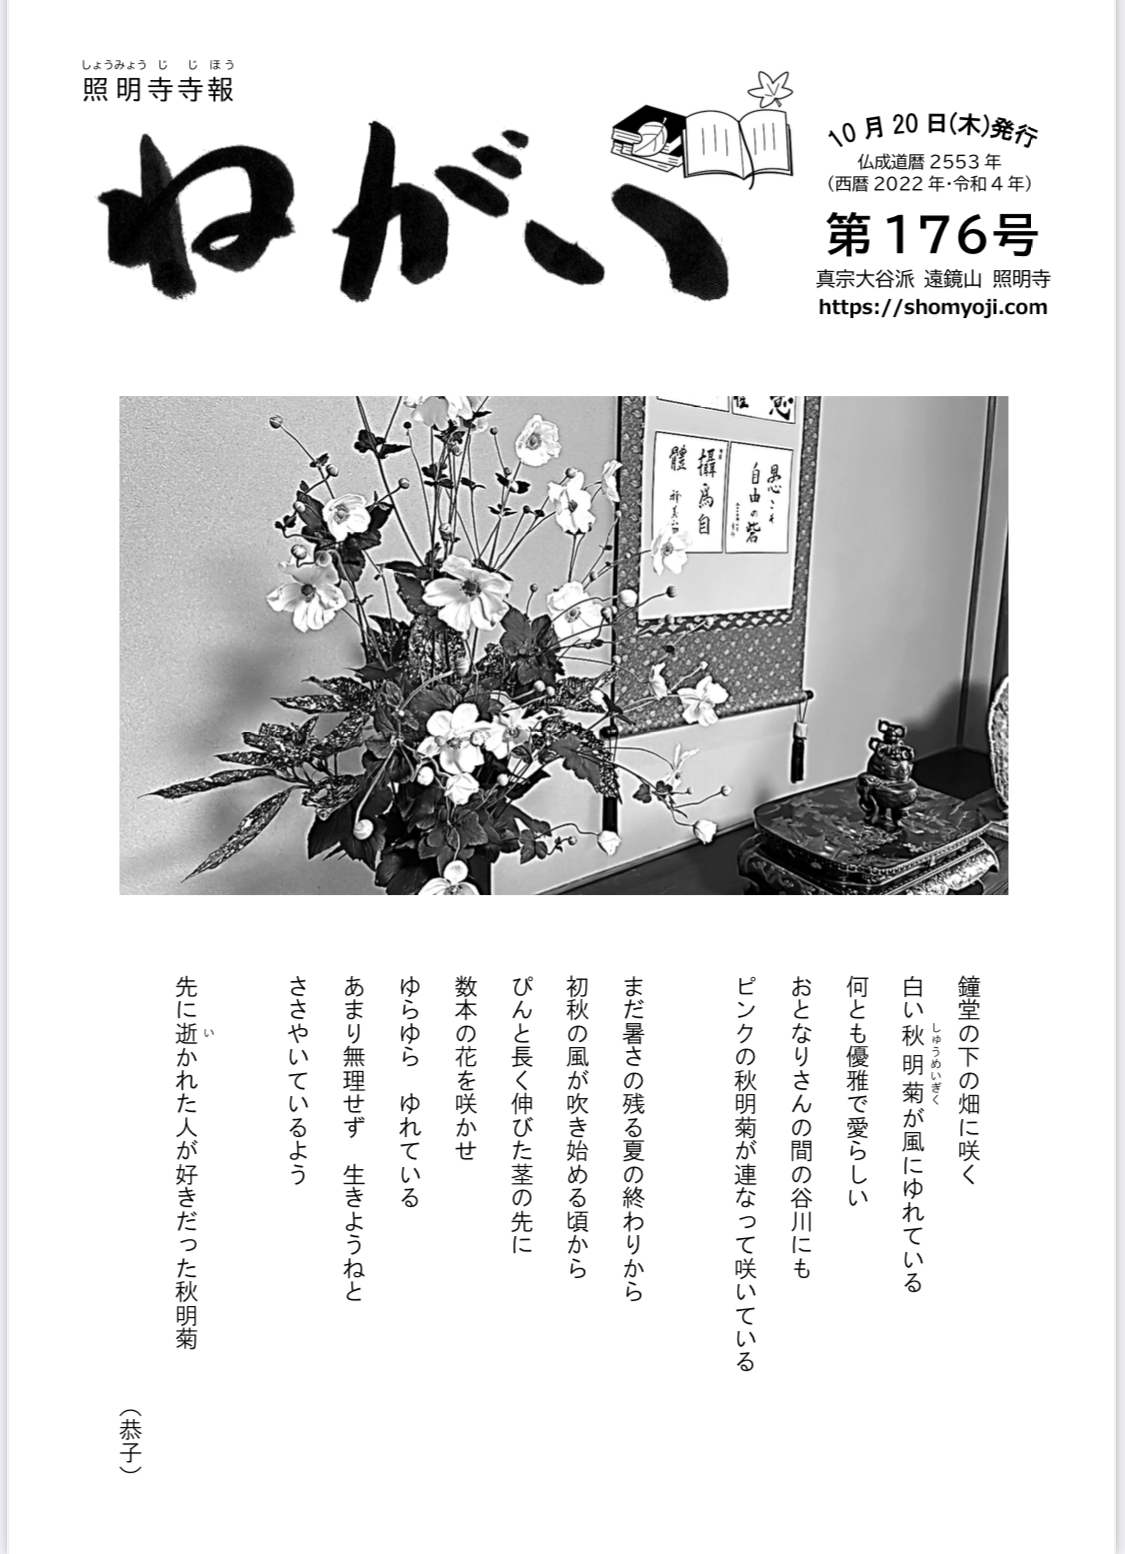 寺報「願い」 第176号 2022年10月20日発行